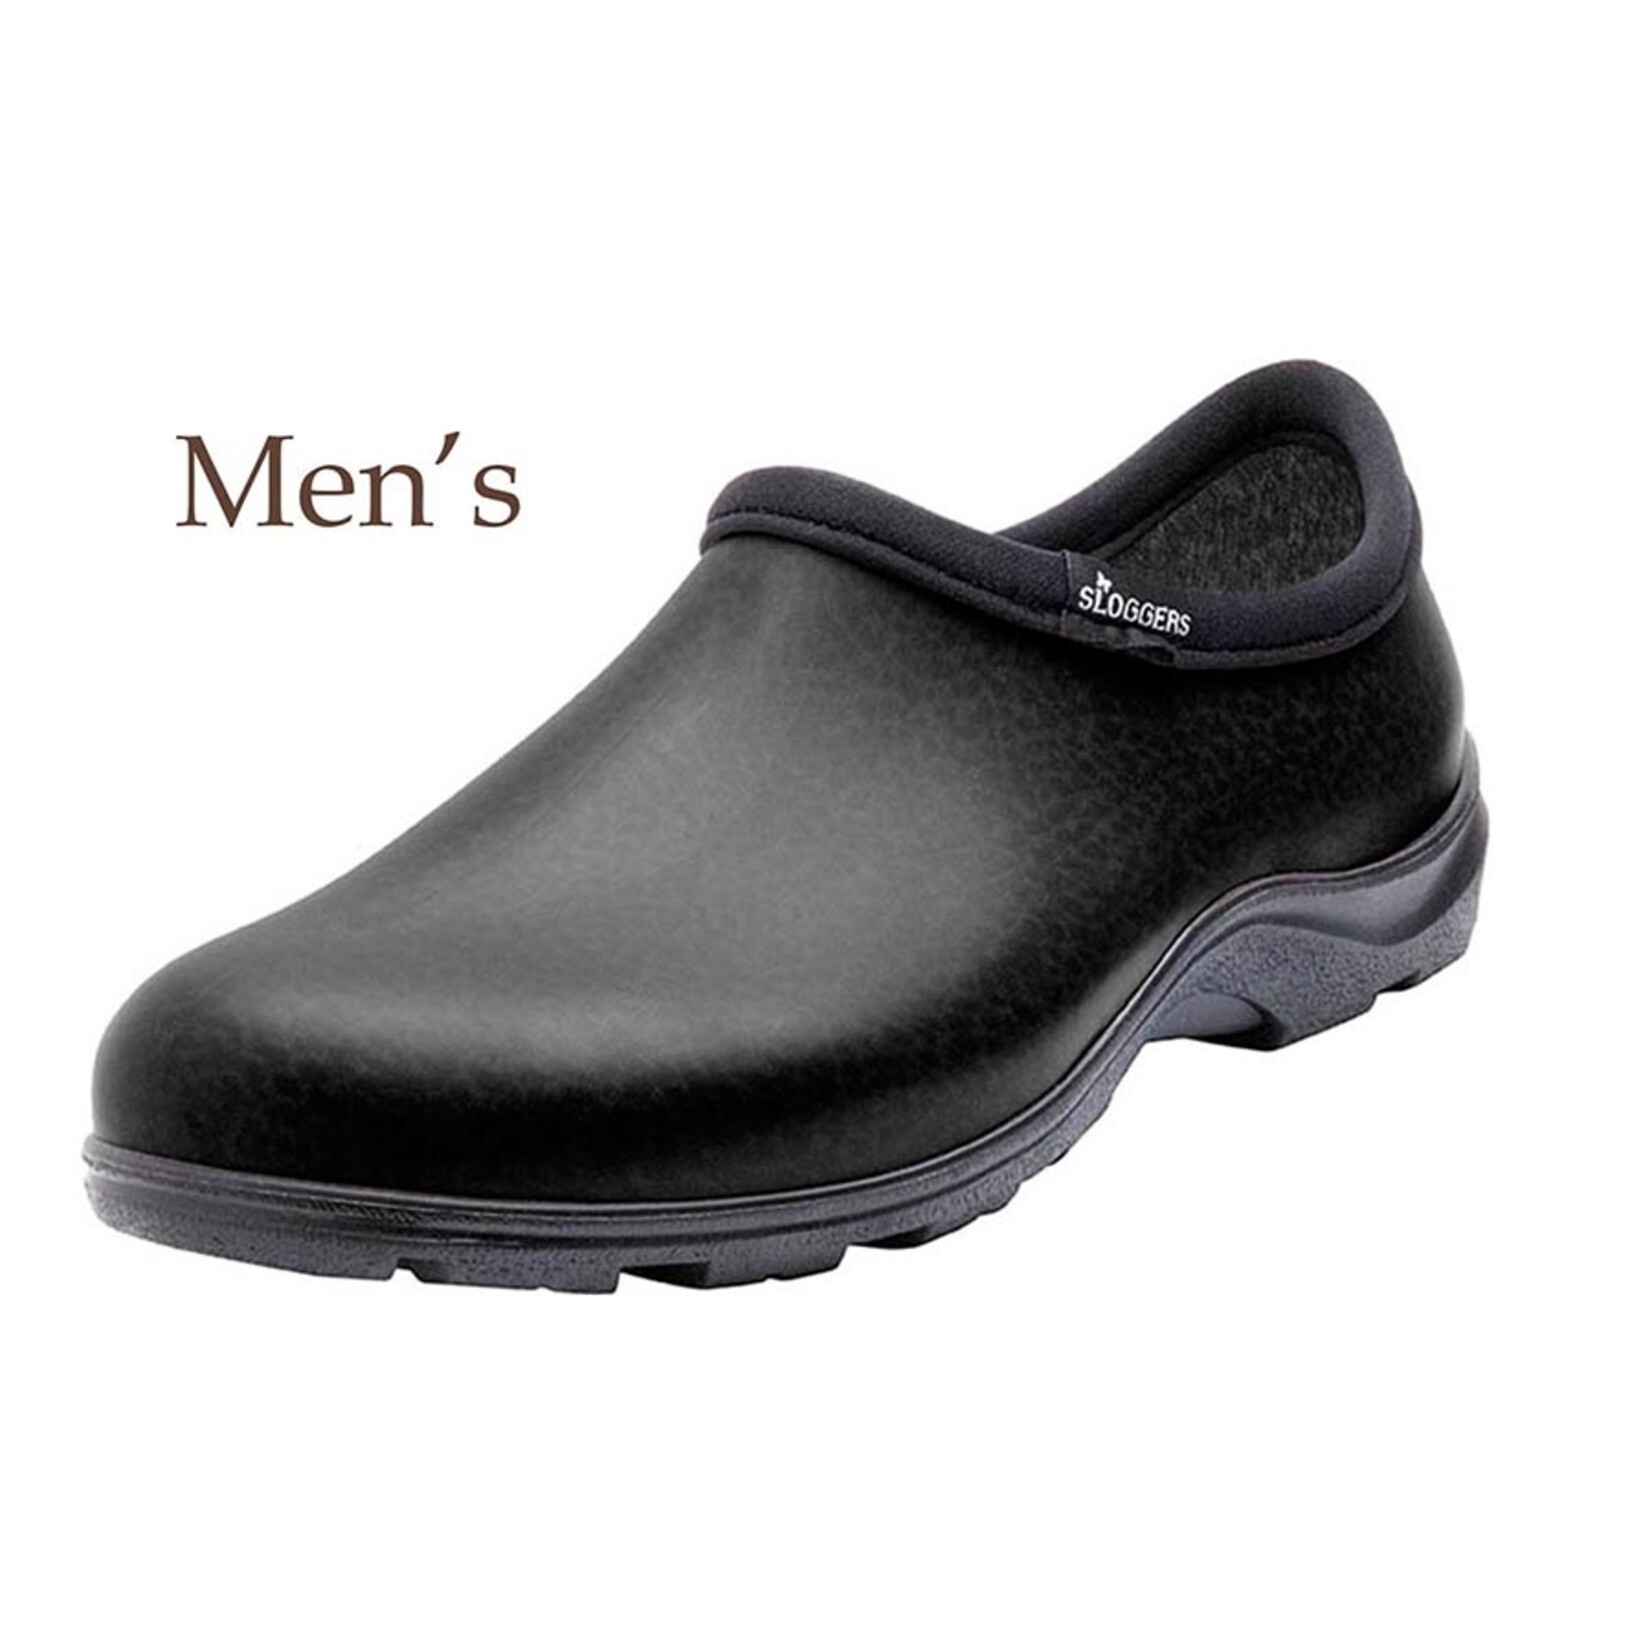 Sloggers Garden Shoe Men's Black Size 11